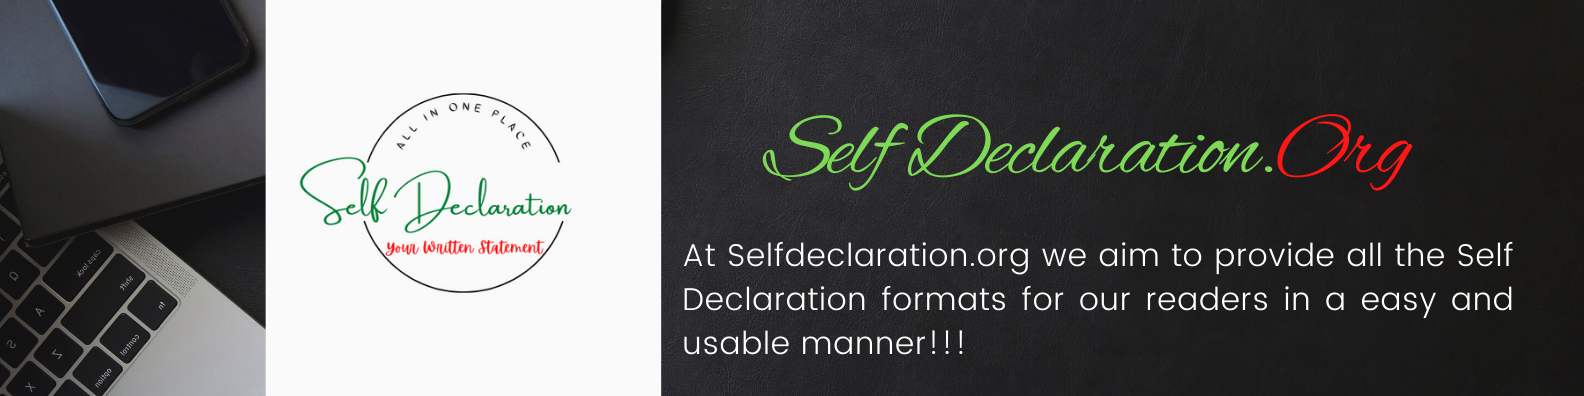 Self Declaration